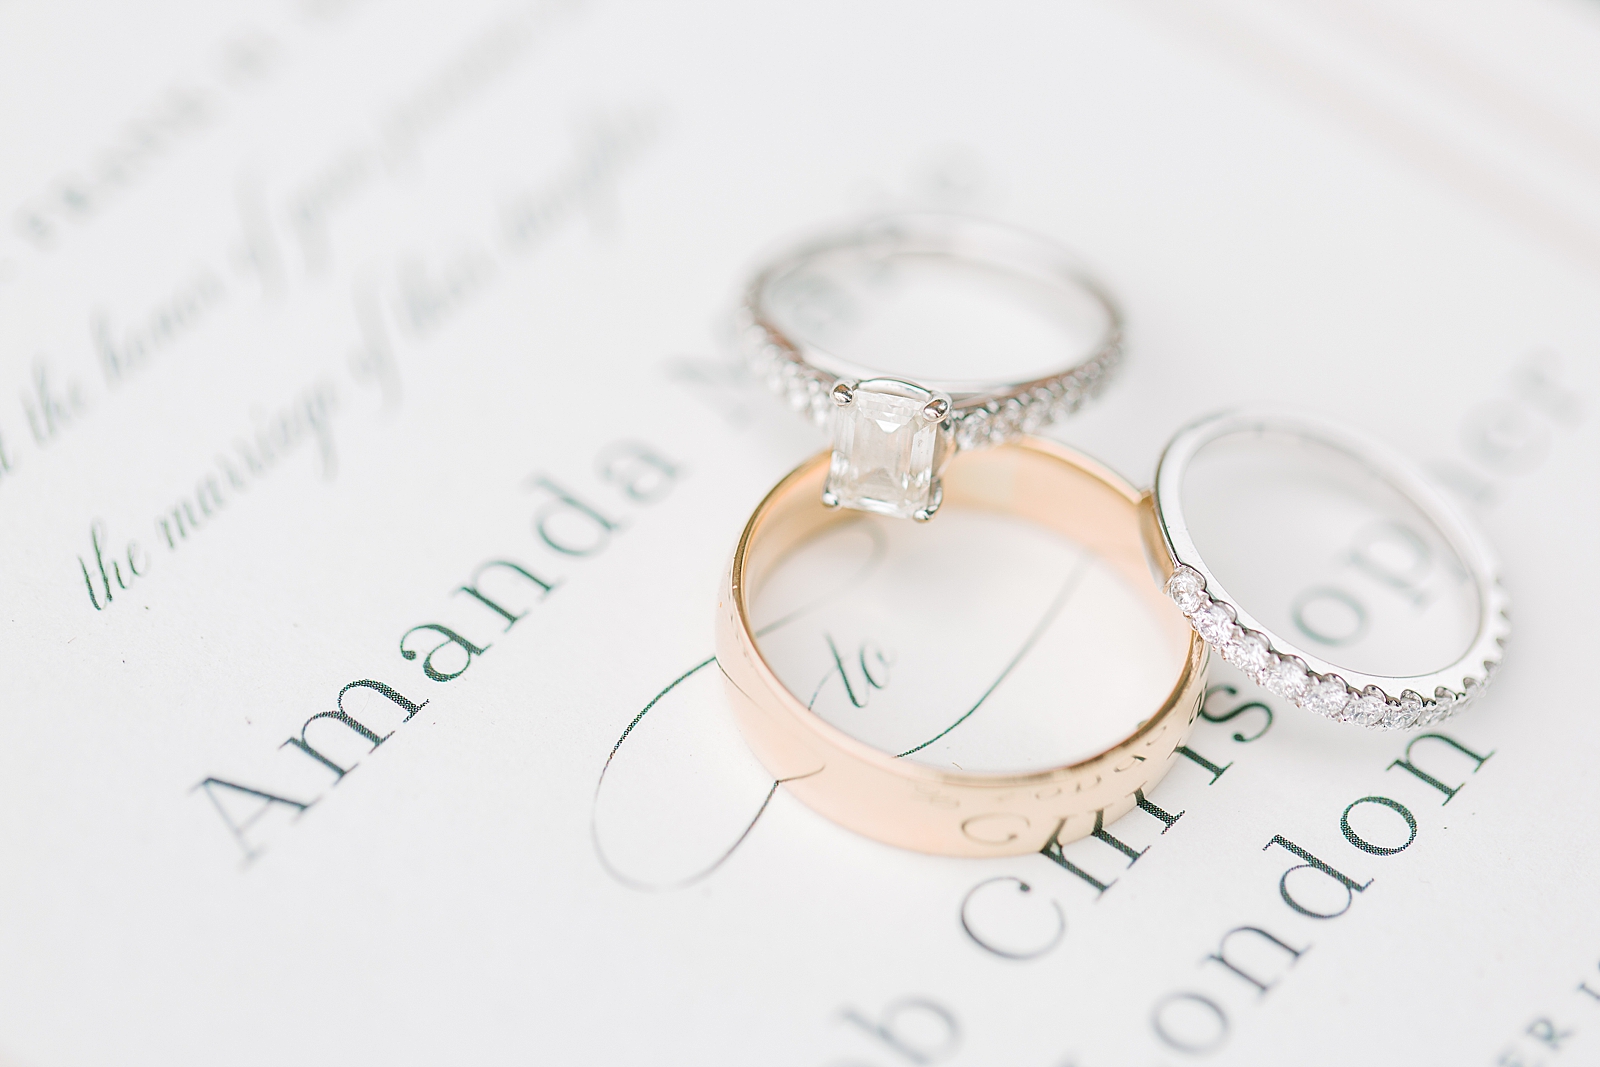 The Hackney Warehouse Wedding Rings on Invitation Photo